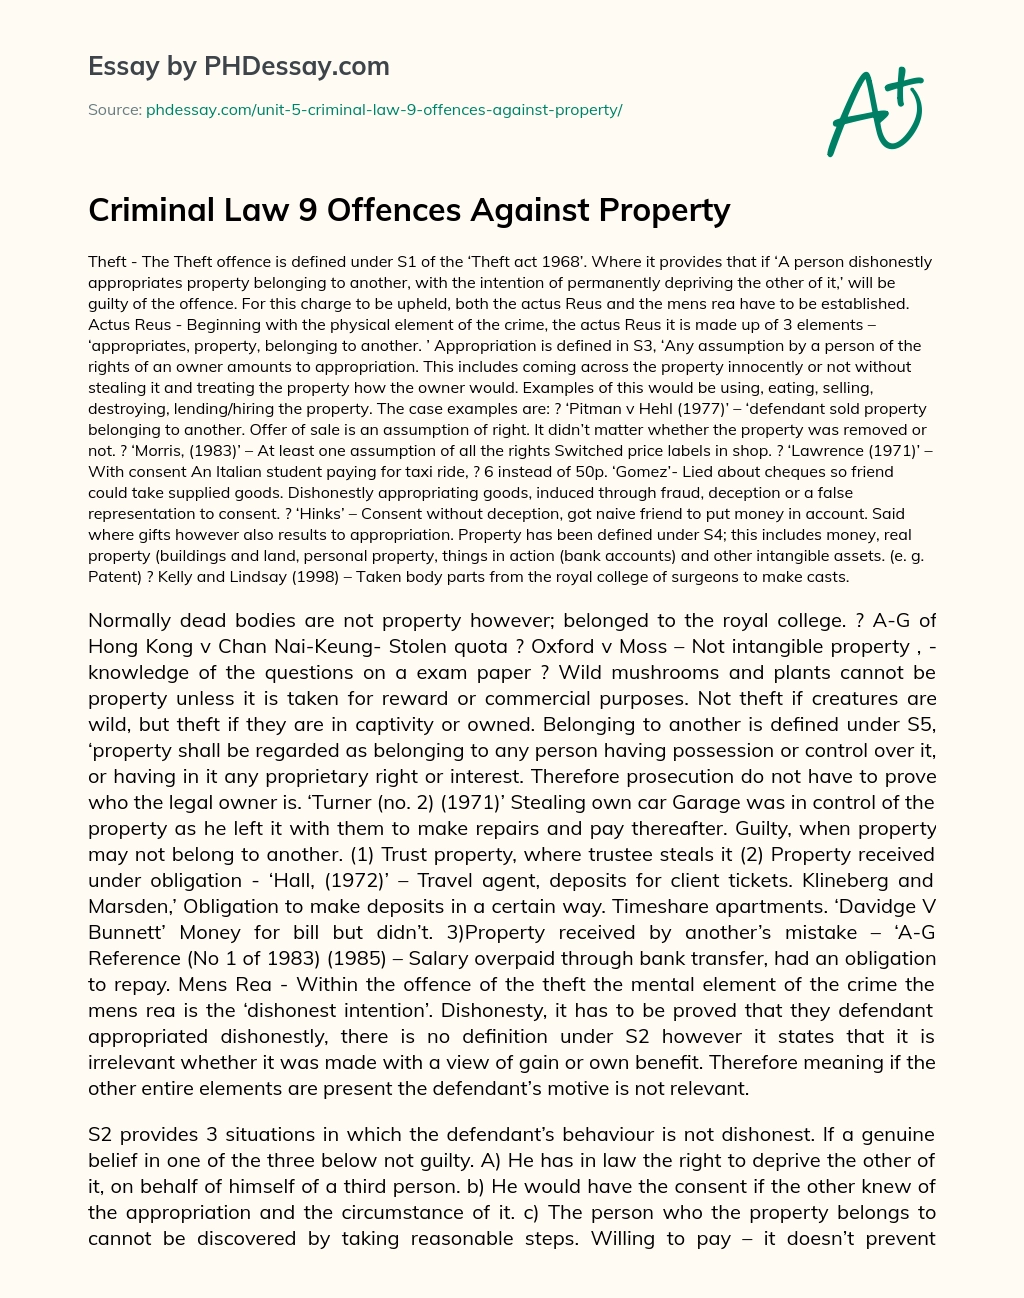 Criminal Law 9 Offences Against Property essay